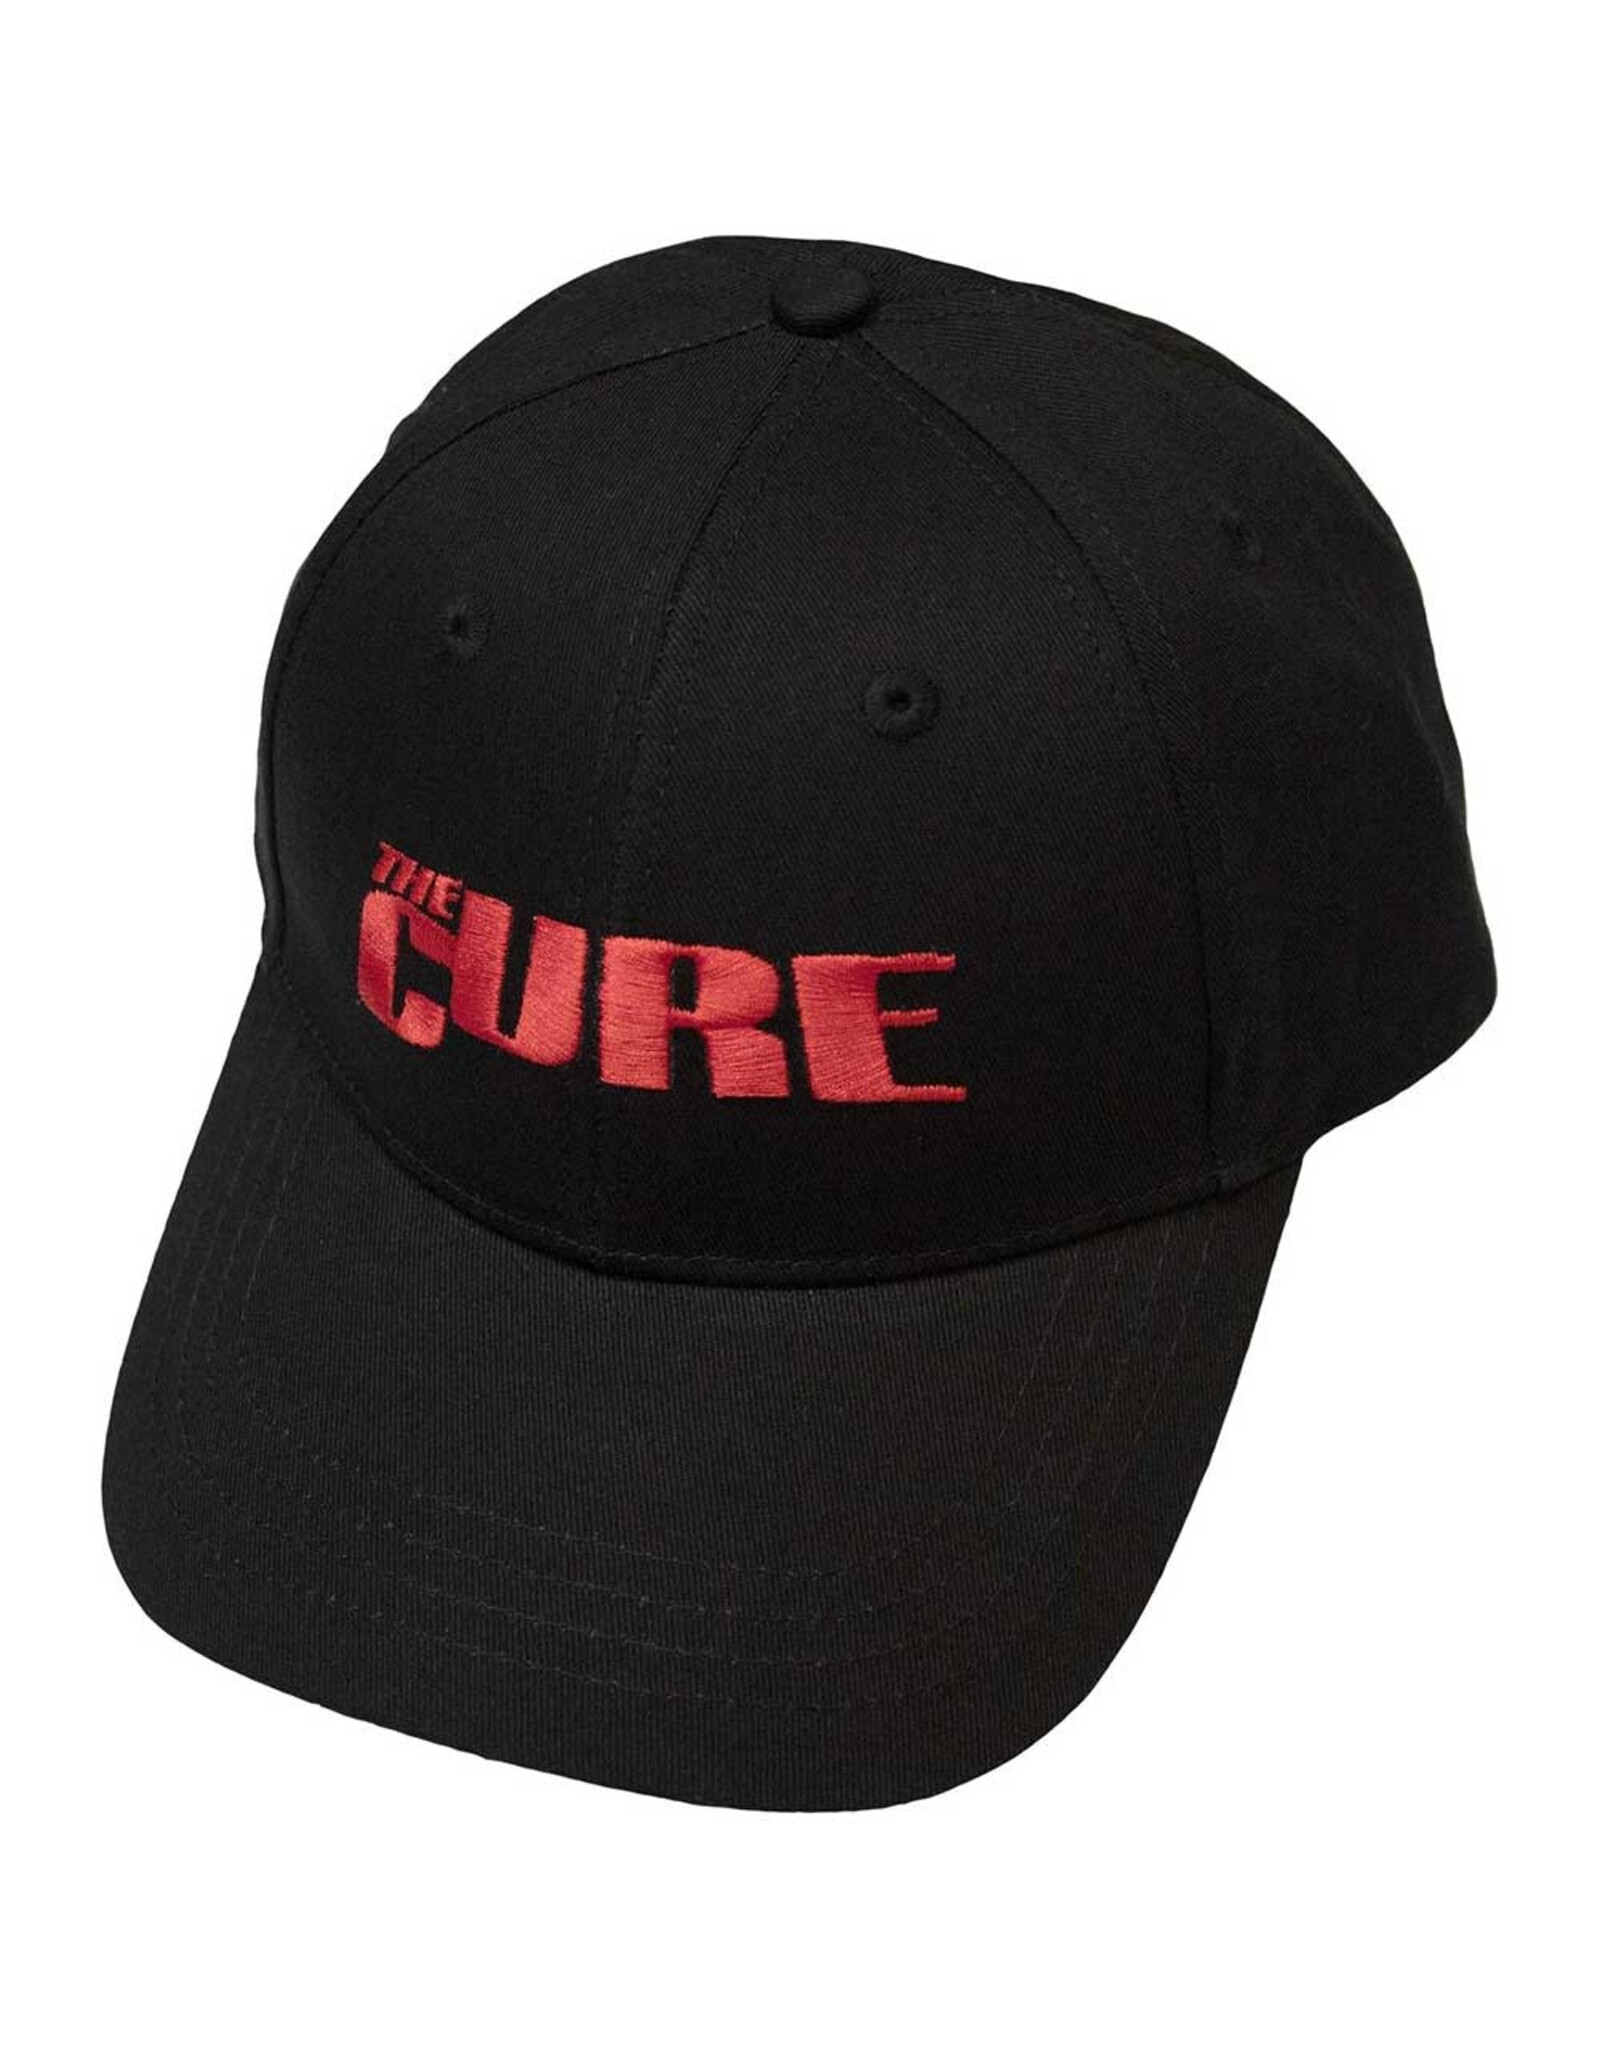 The Cure / Classic Logo Baseball Cap